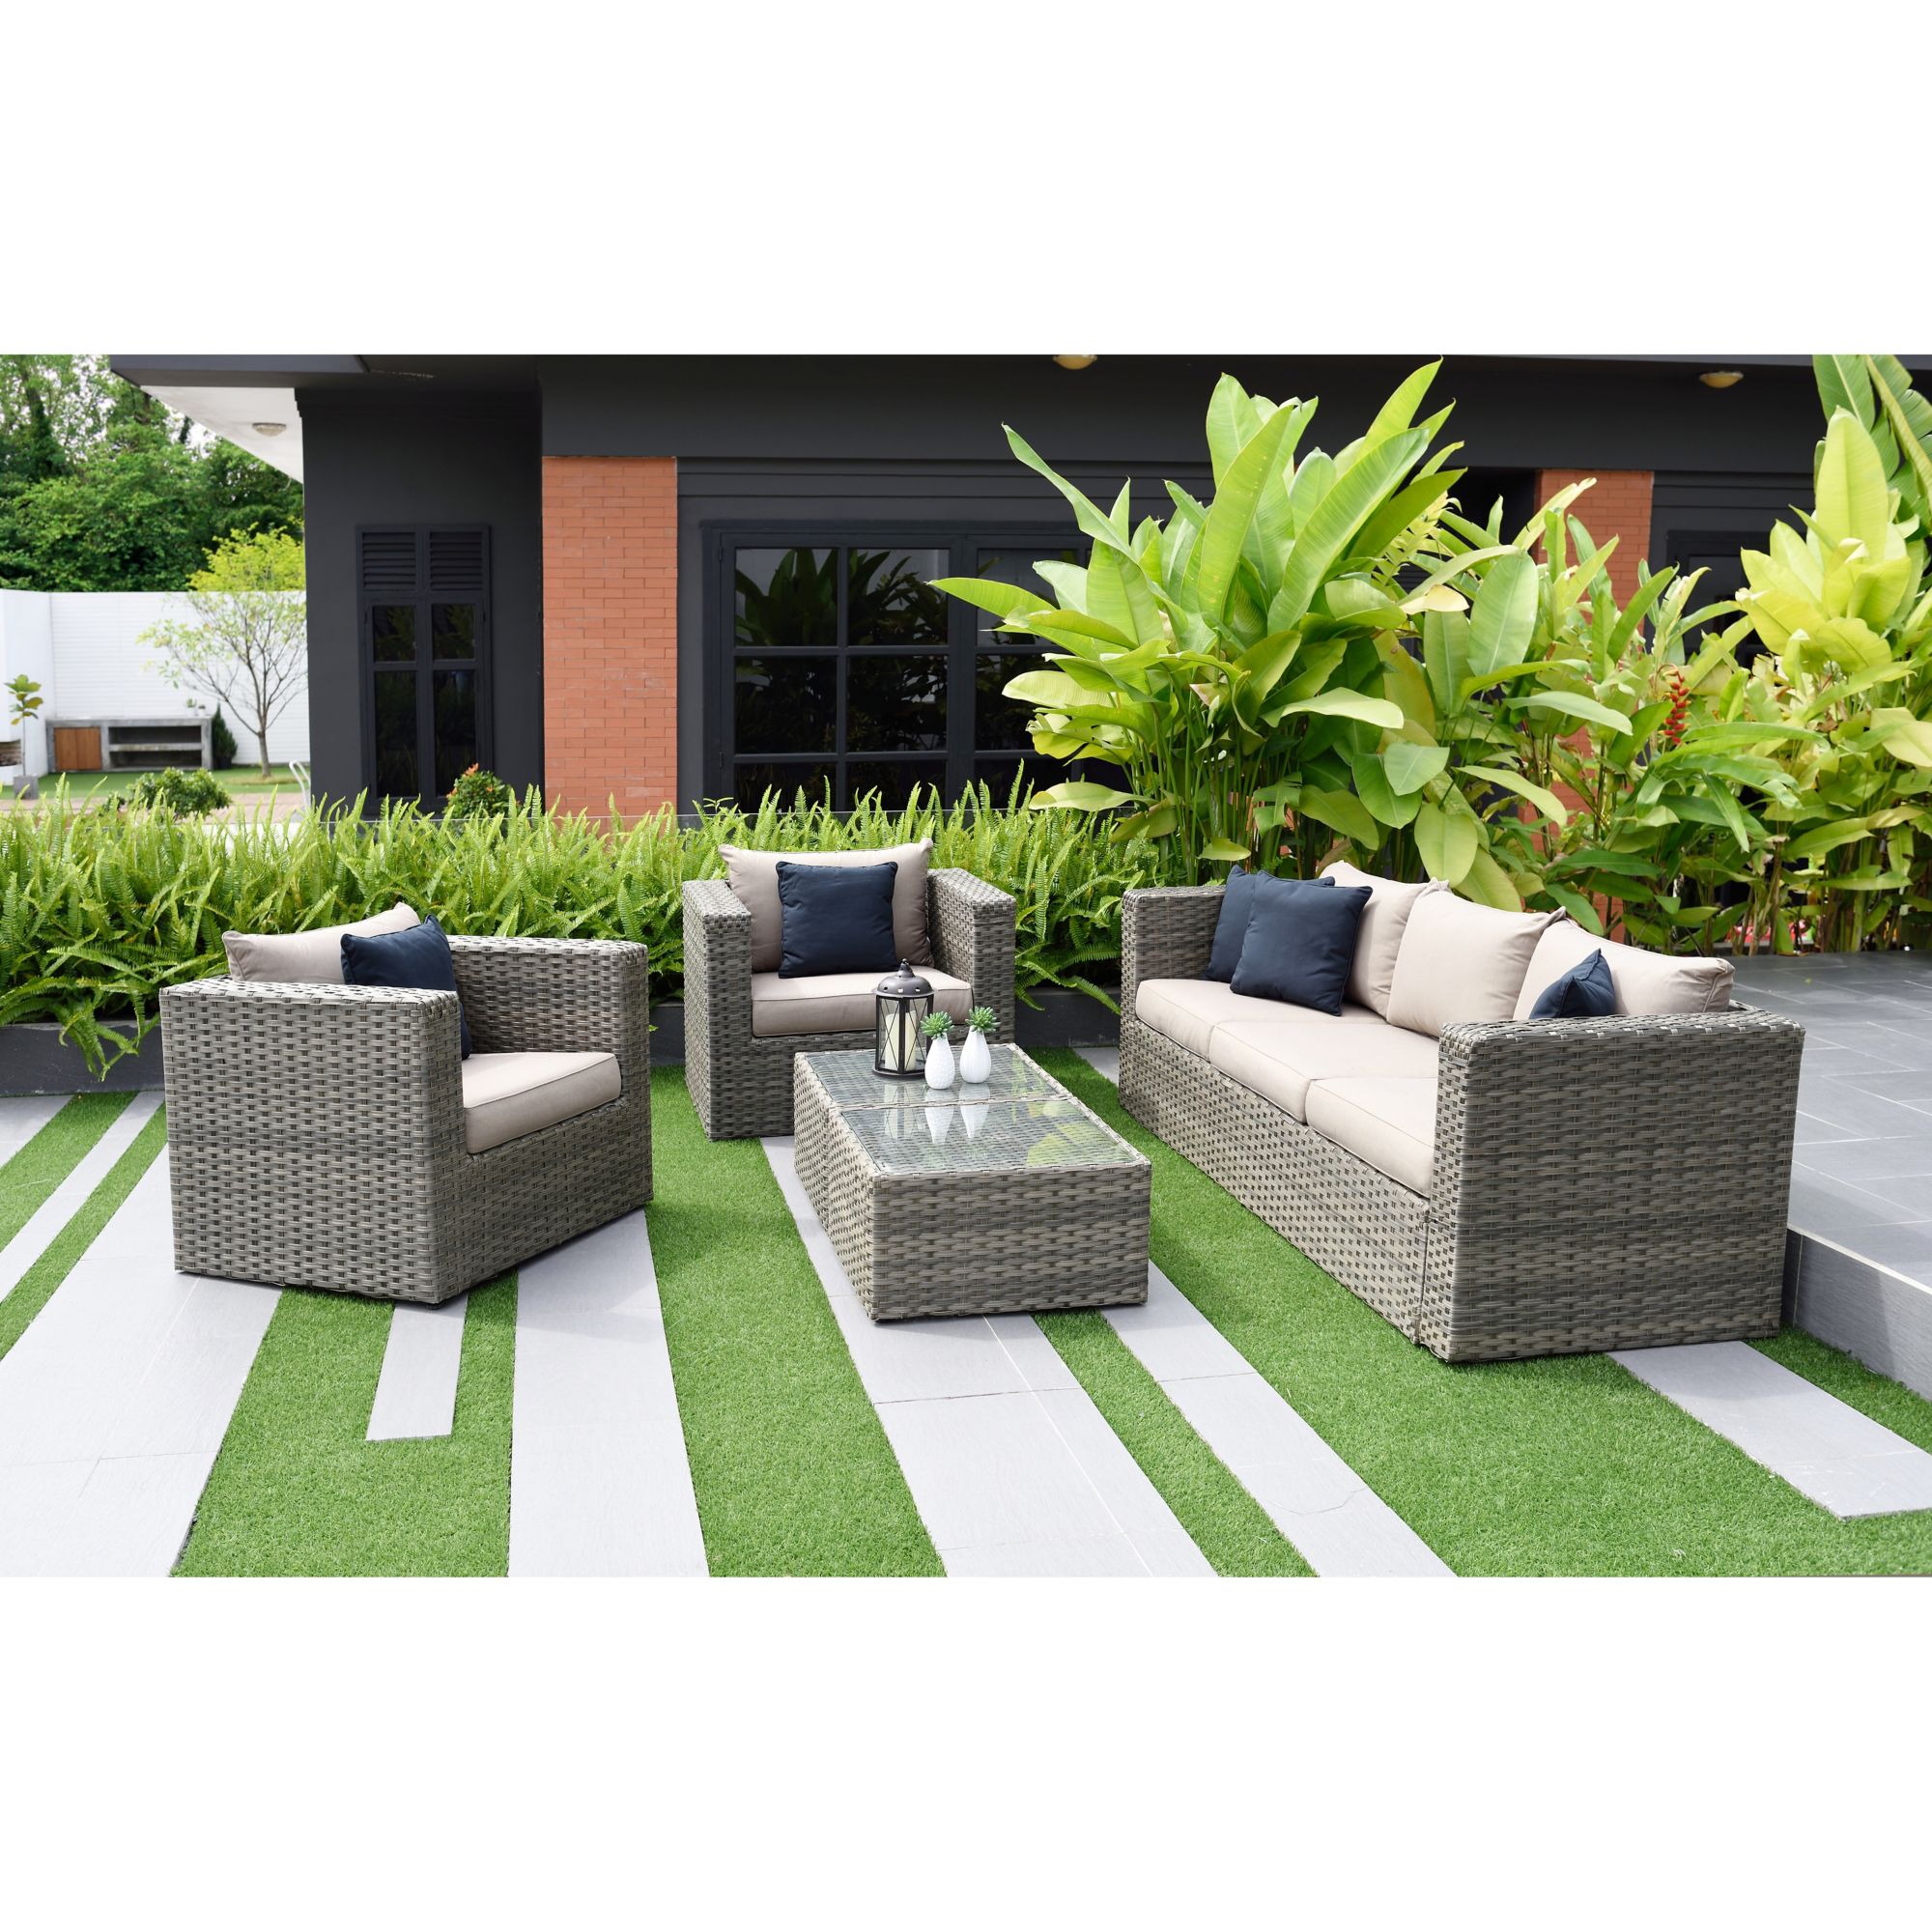 patio set on grass